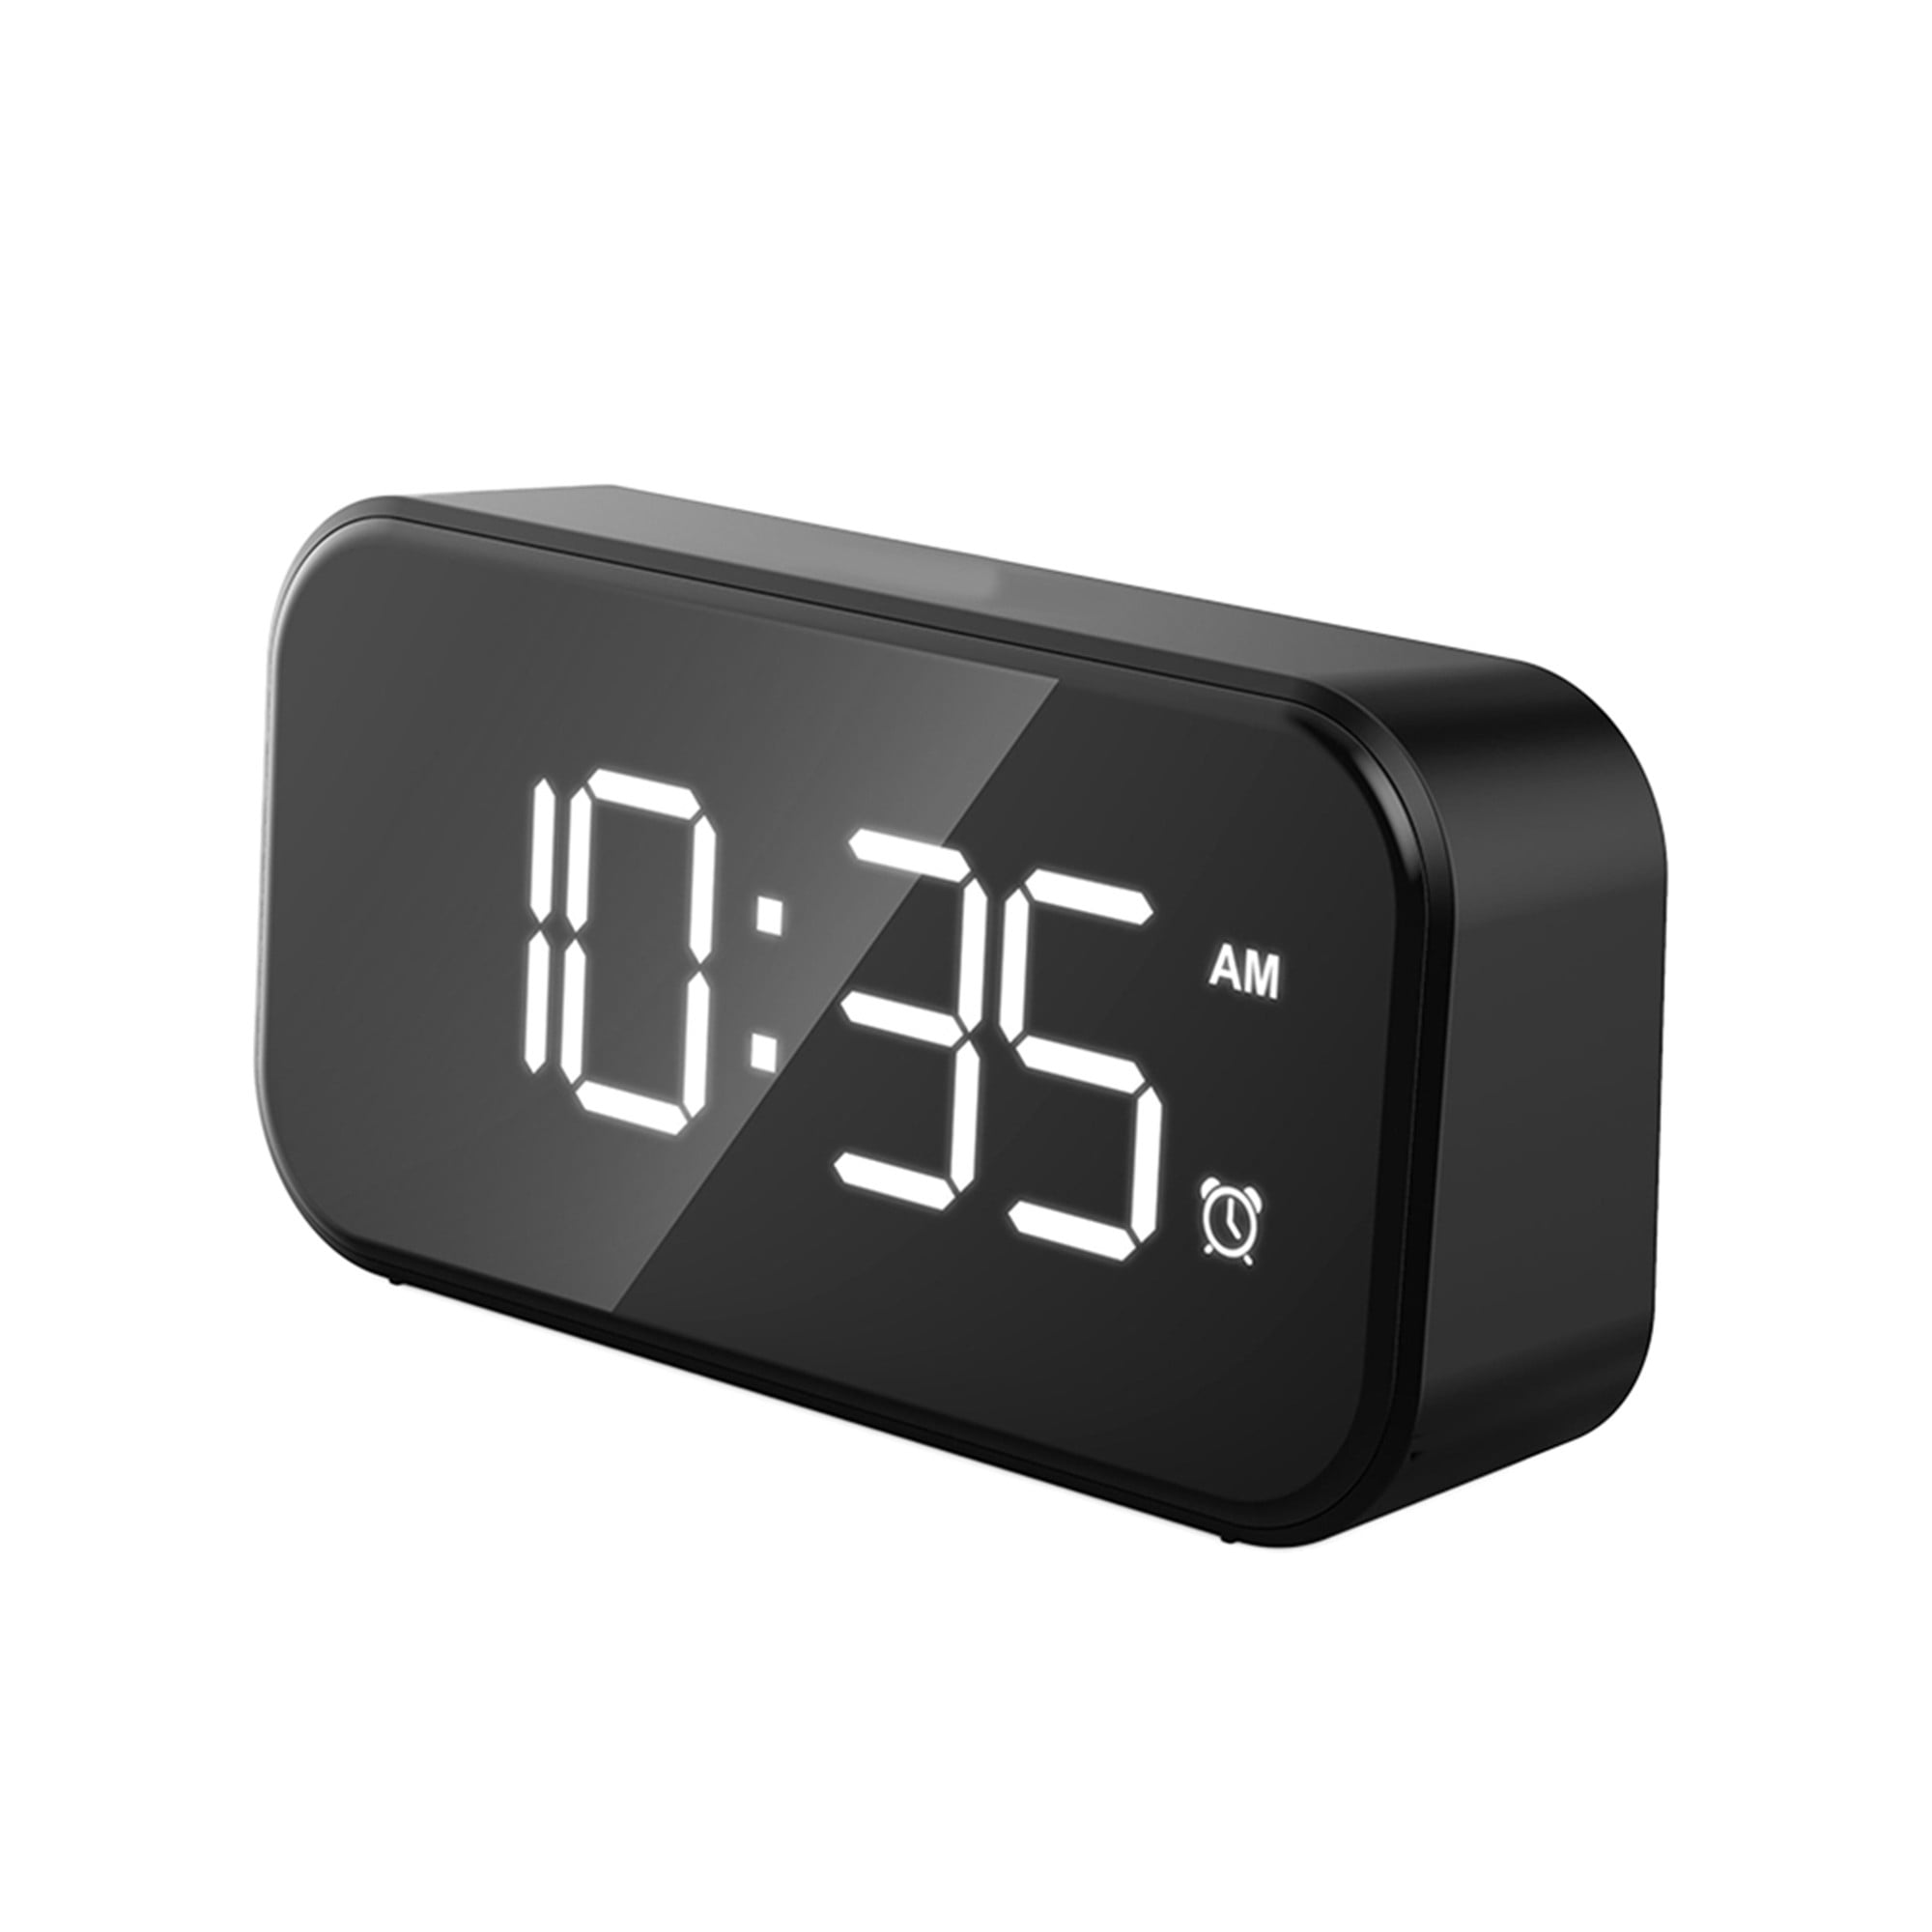 LED Digital Alarm Clock Mirrored Snooze Time Calendar with Adjustable ...